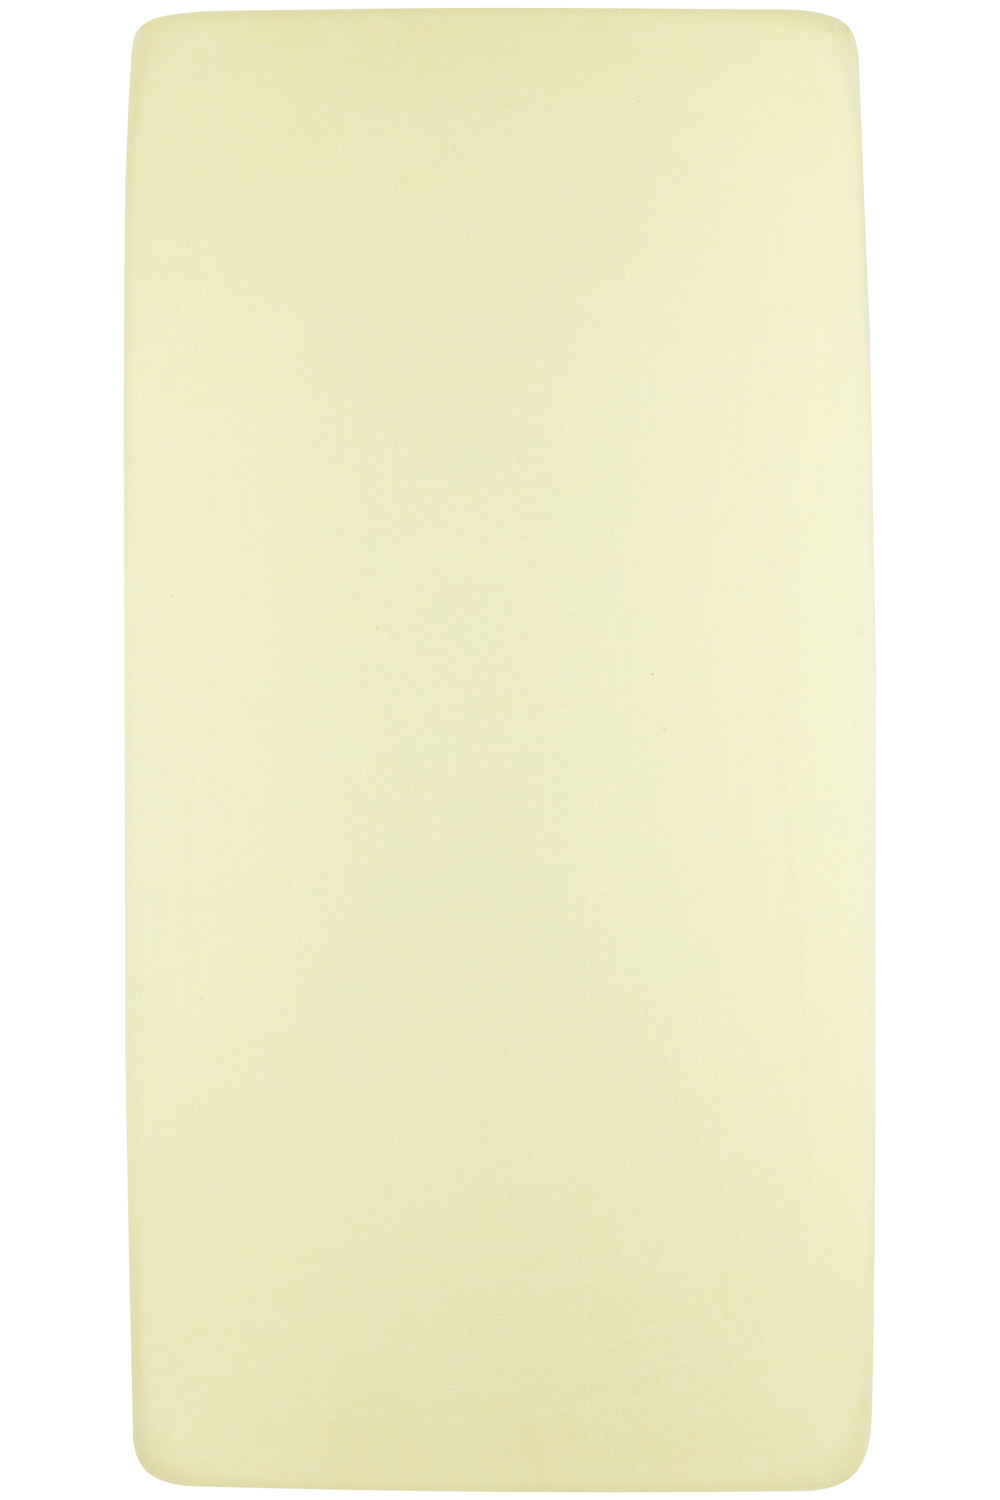 Jersey Hoeslaken Wieg - Soft Yellow - 40x80/90cm